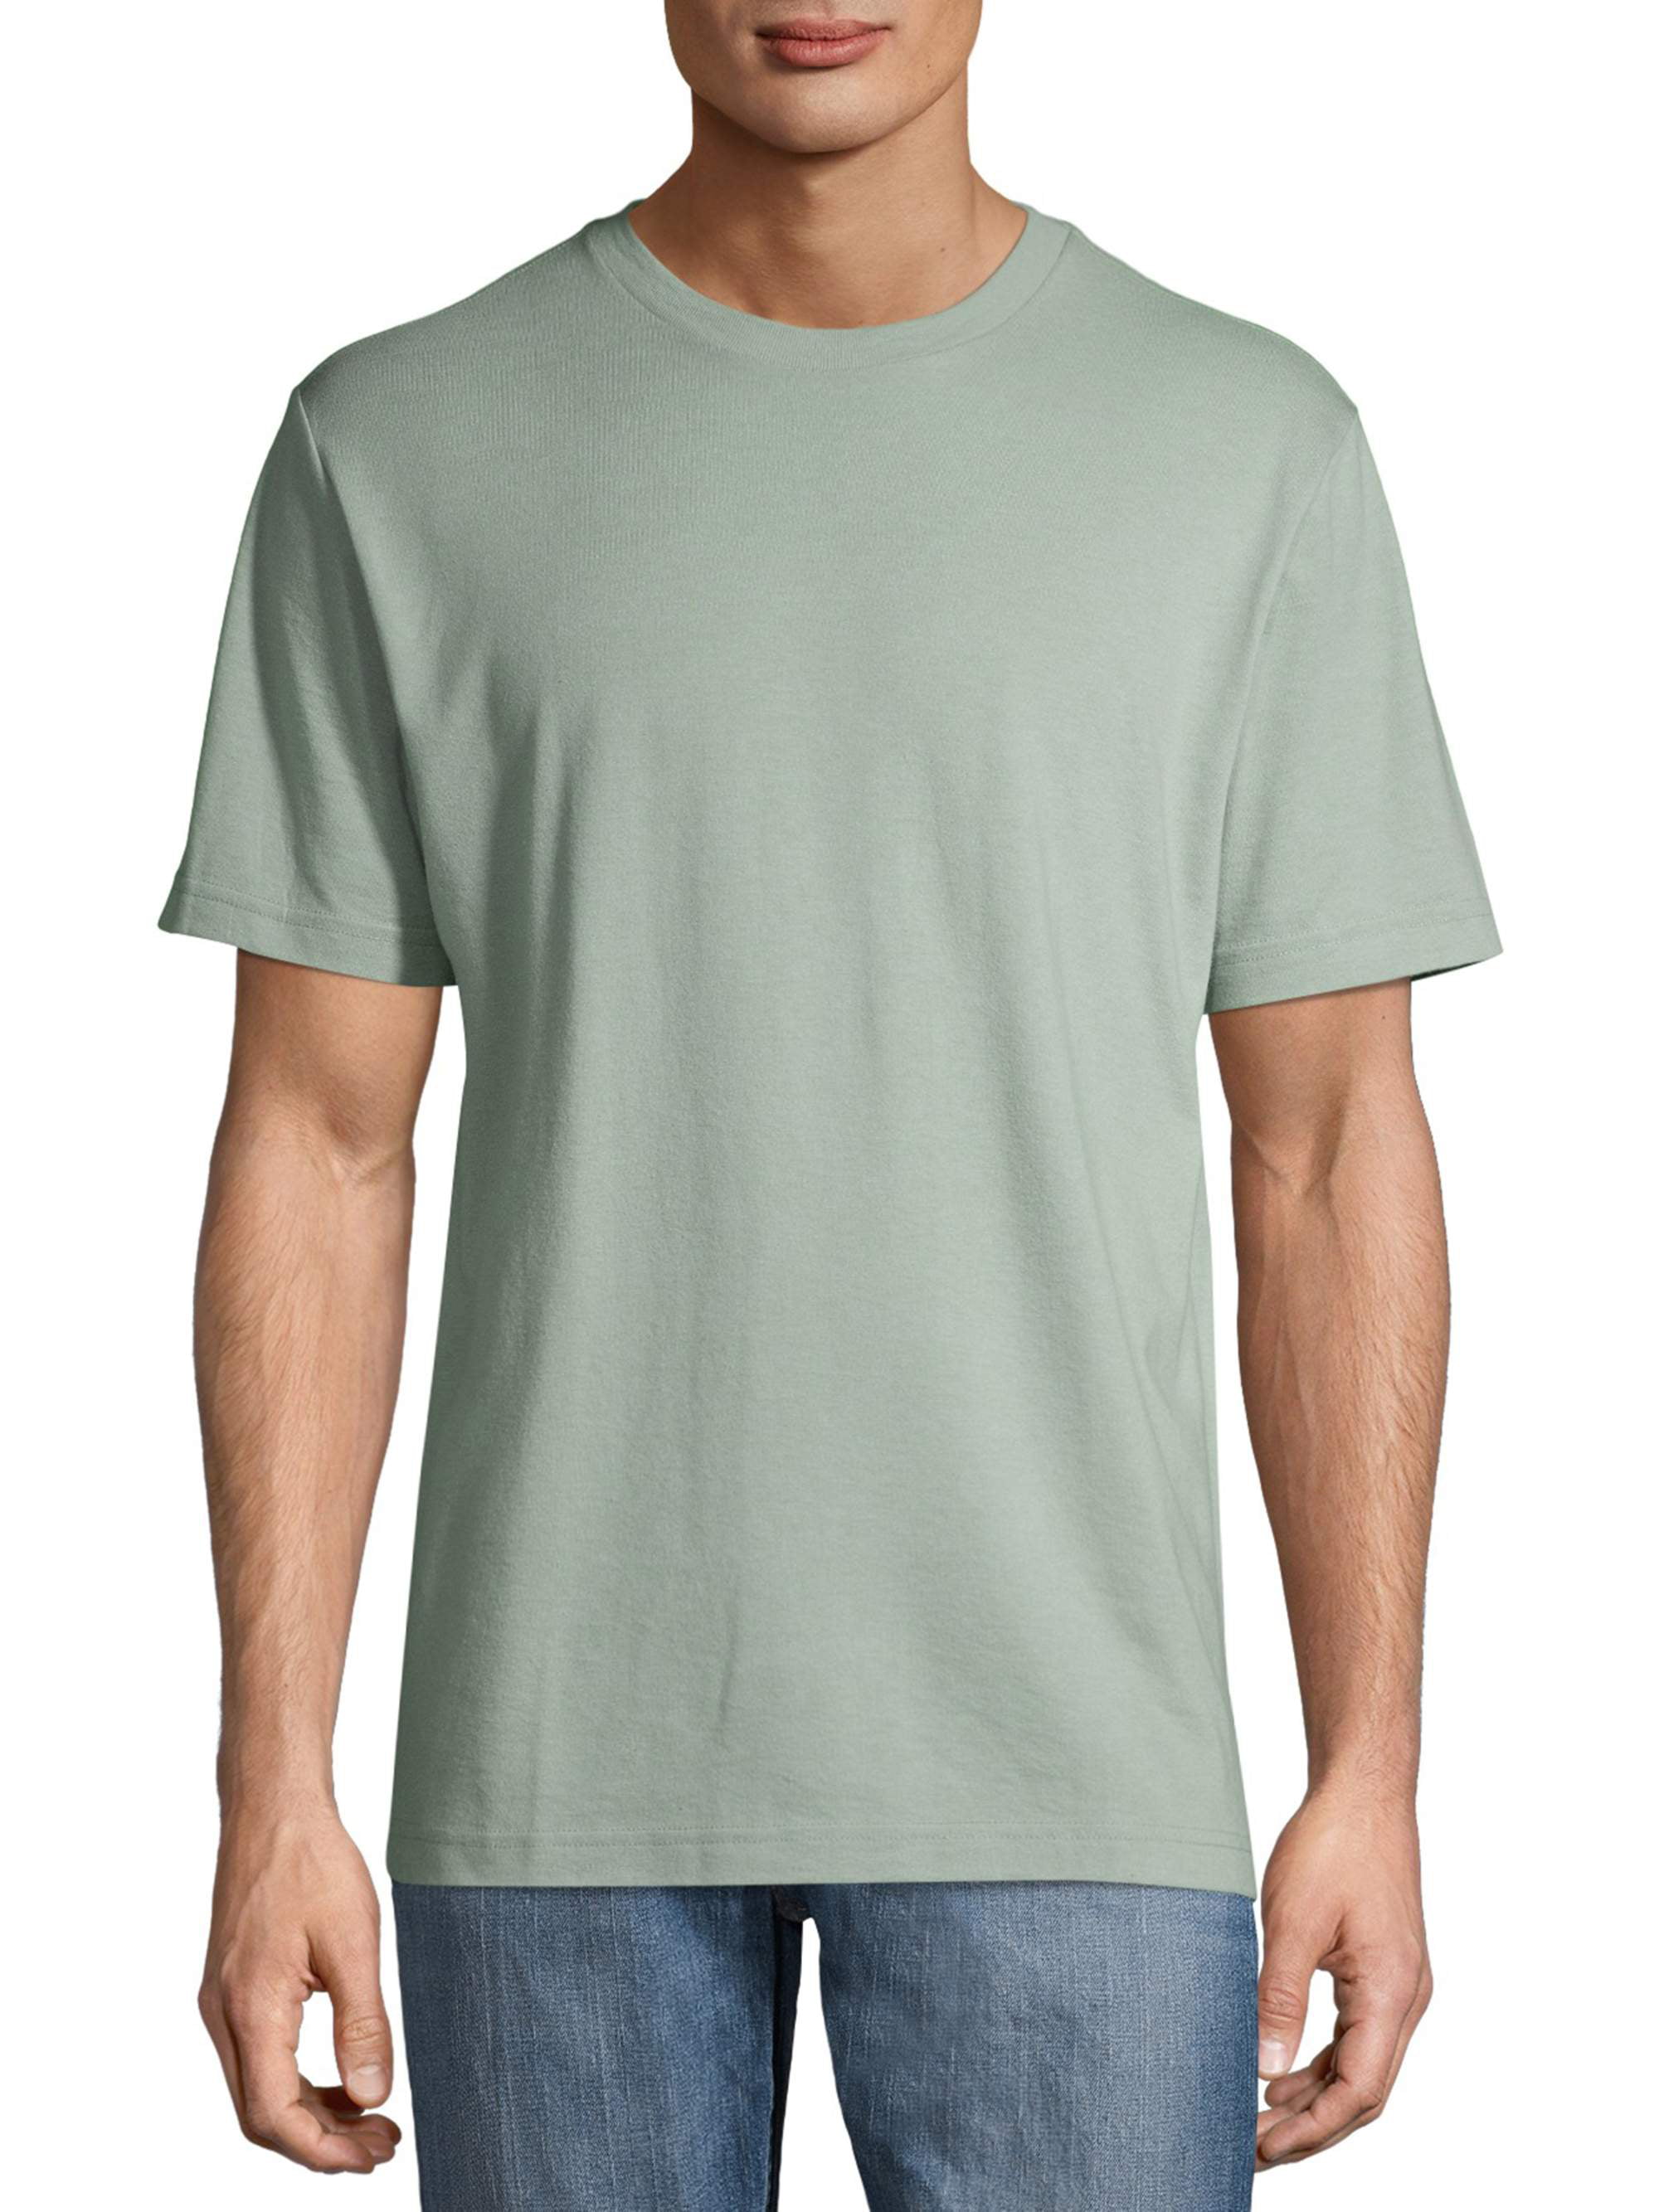 GEORGE Short Sleeve Pullover Regular T-Shirt (Men's) 1 Pack - Walmart.com